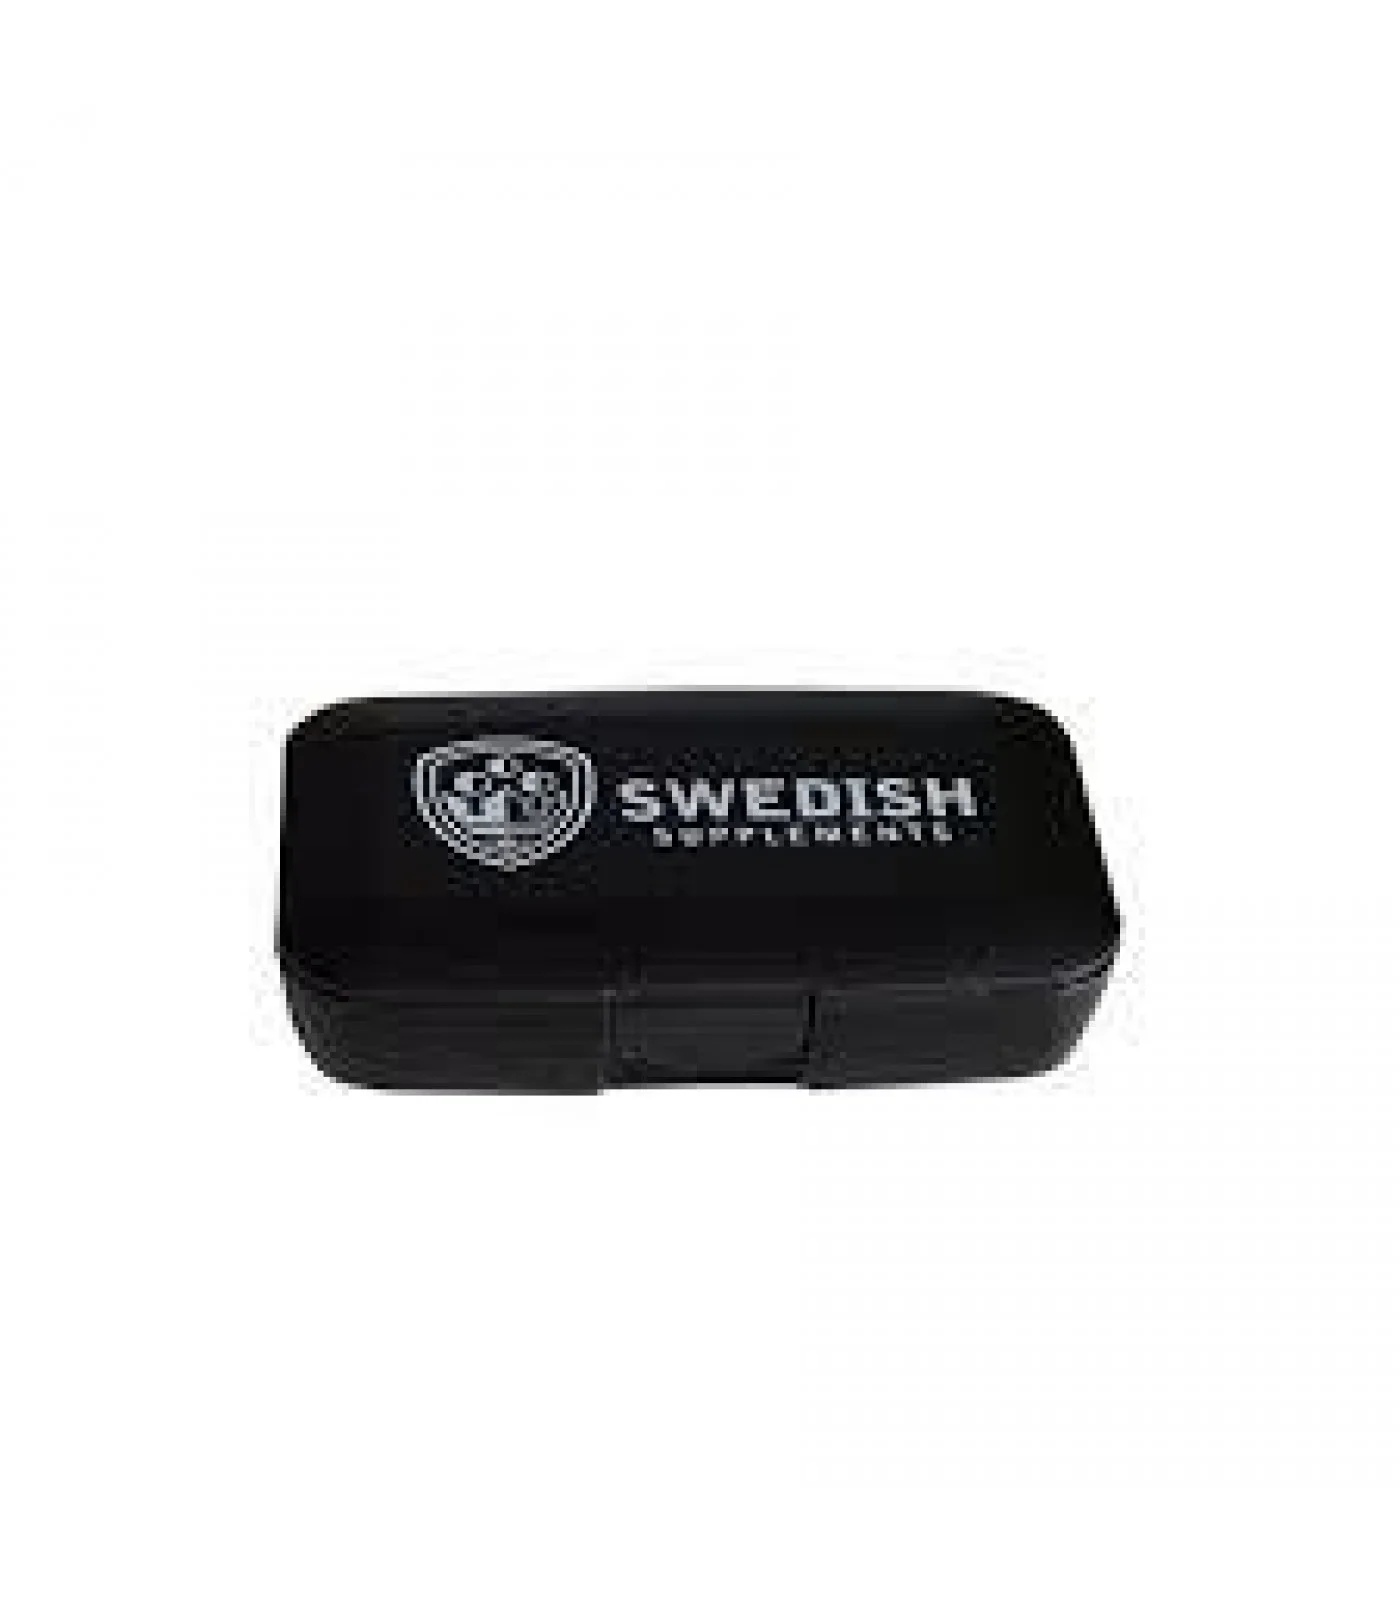 SWEDISH Supplements PILL BOX